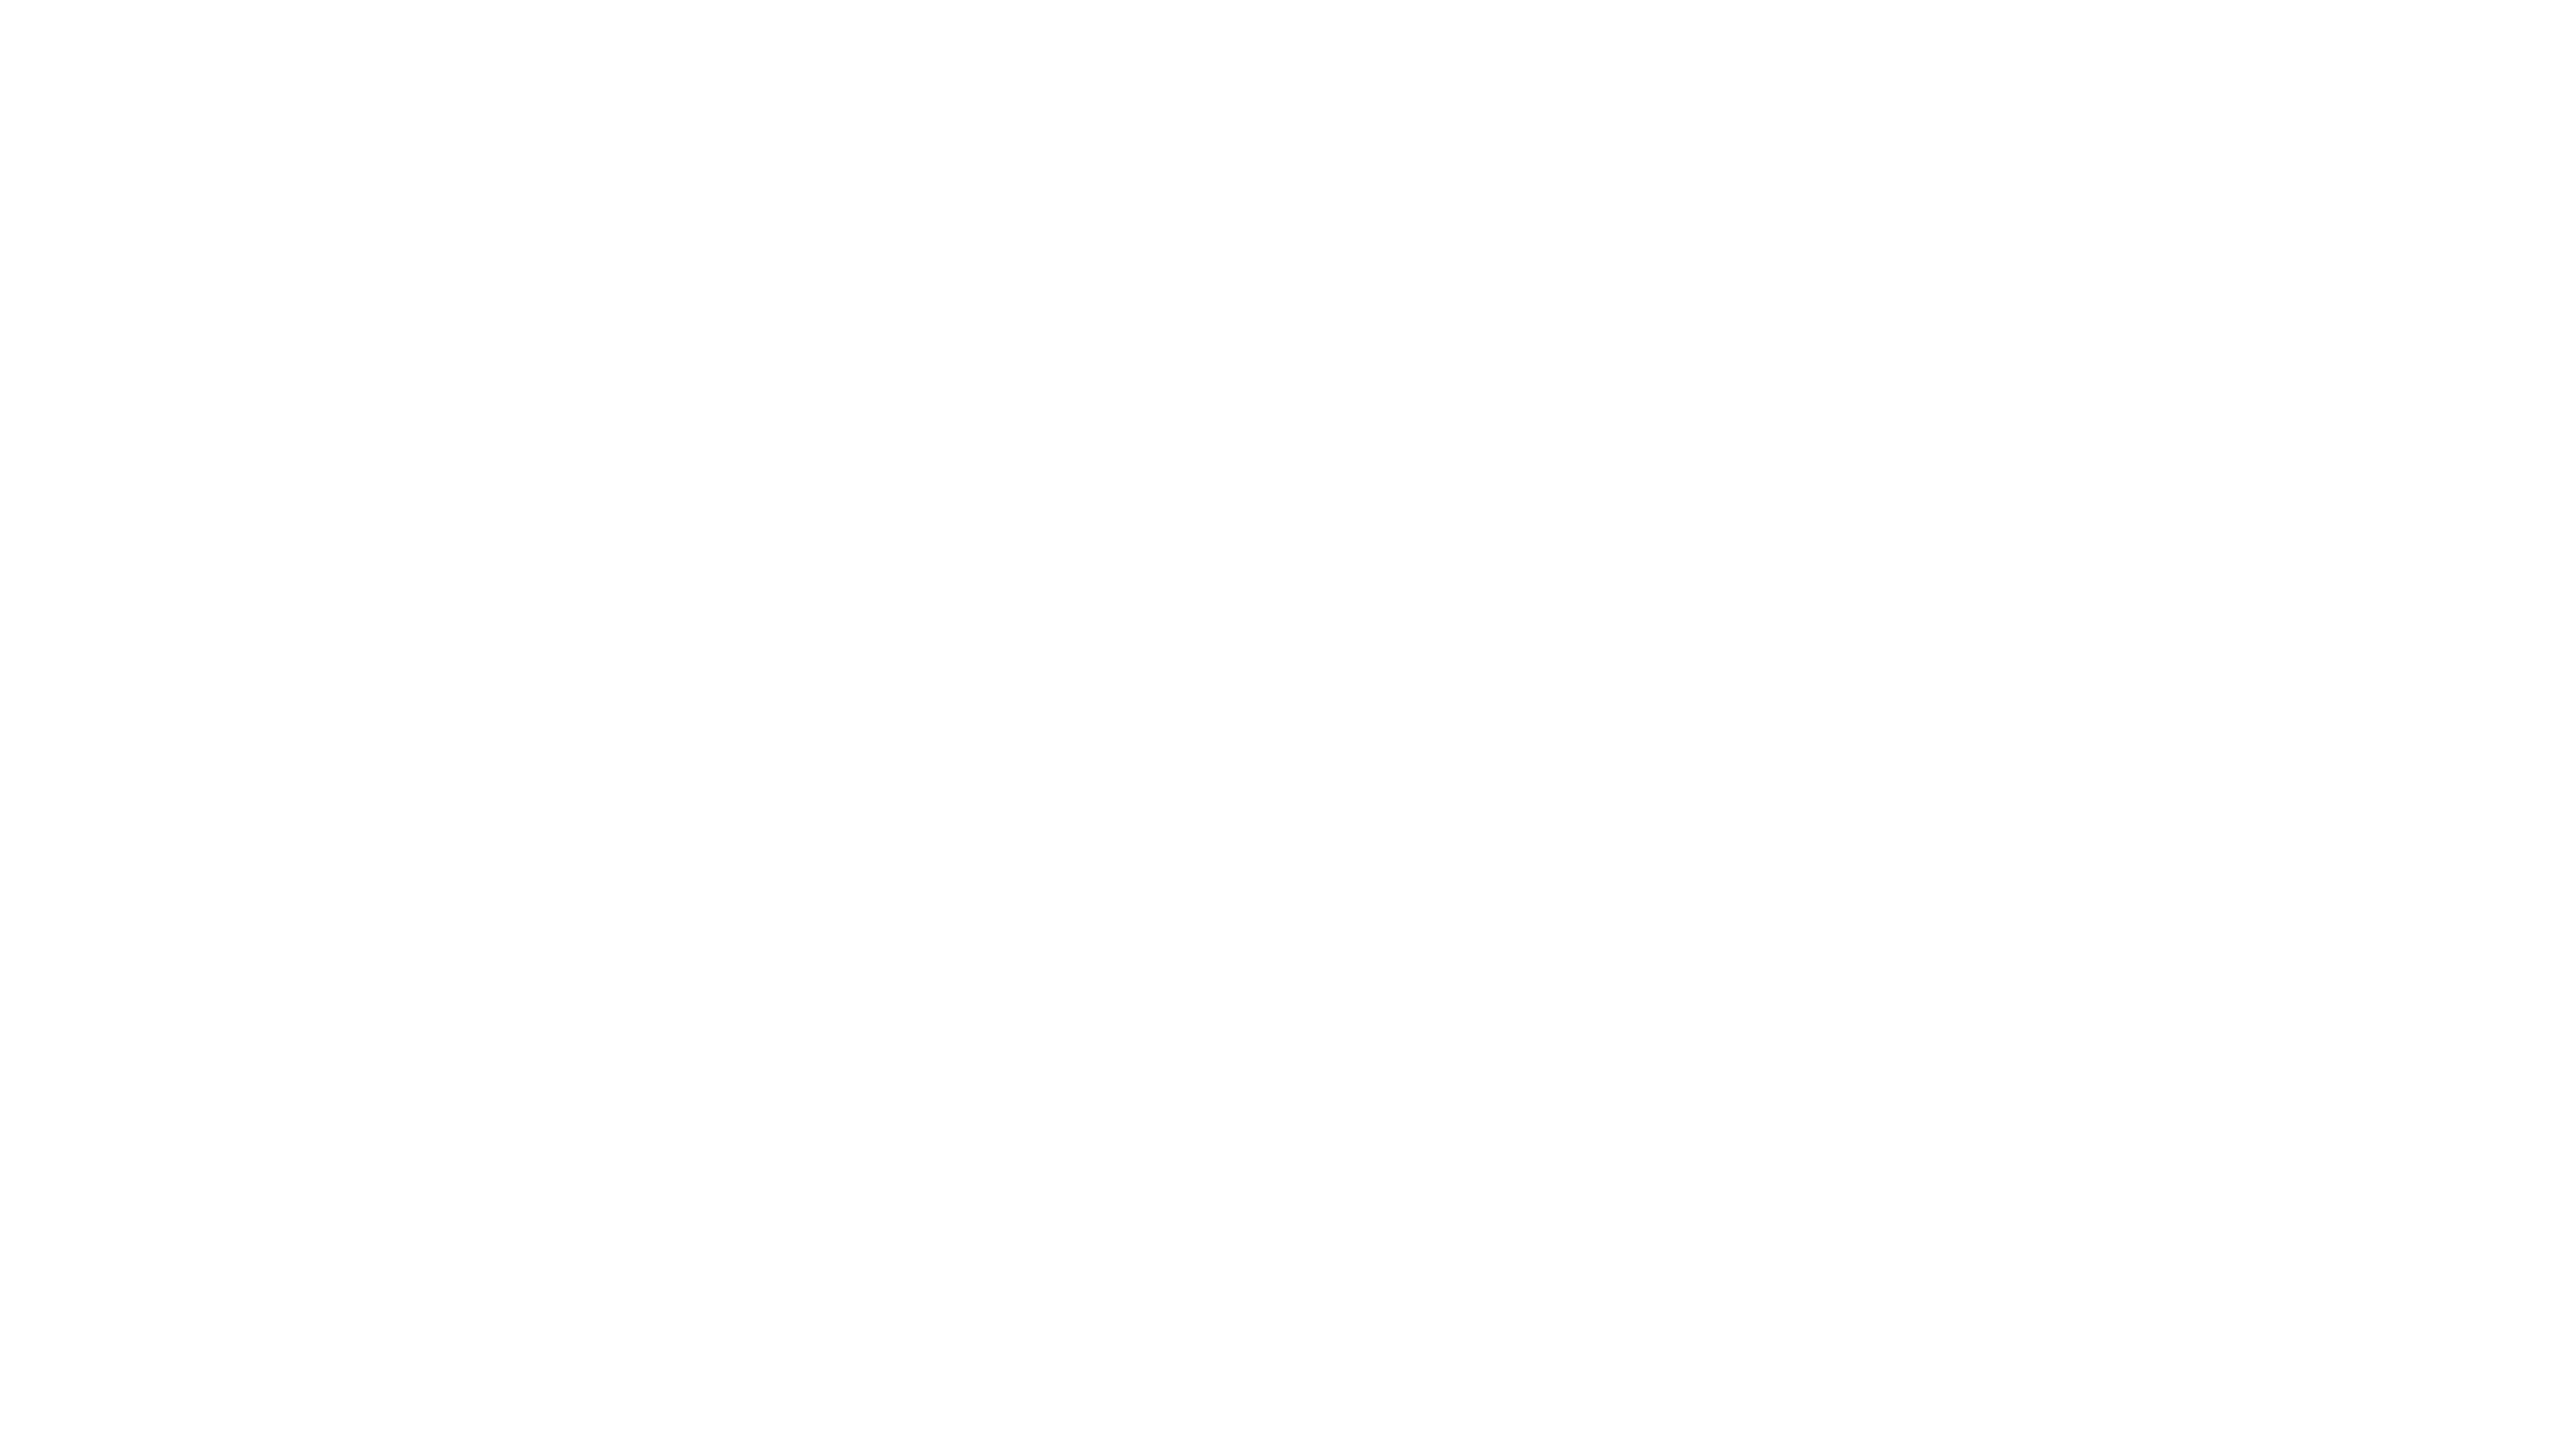 Tour of Britain Men logo